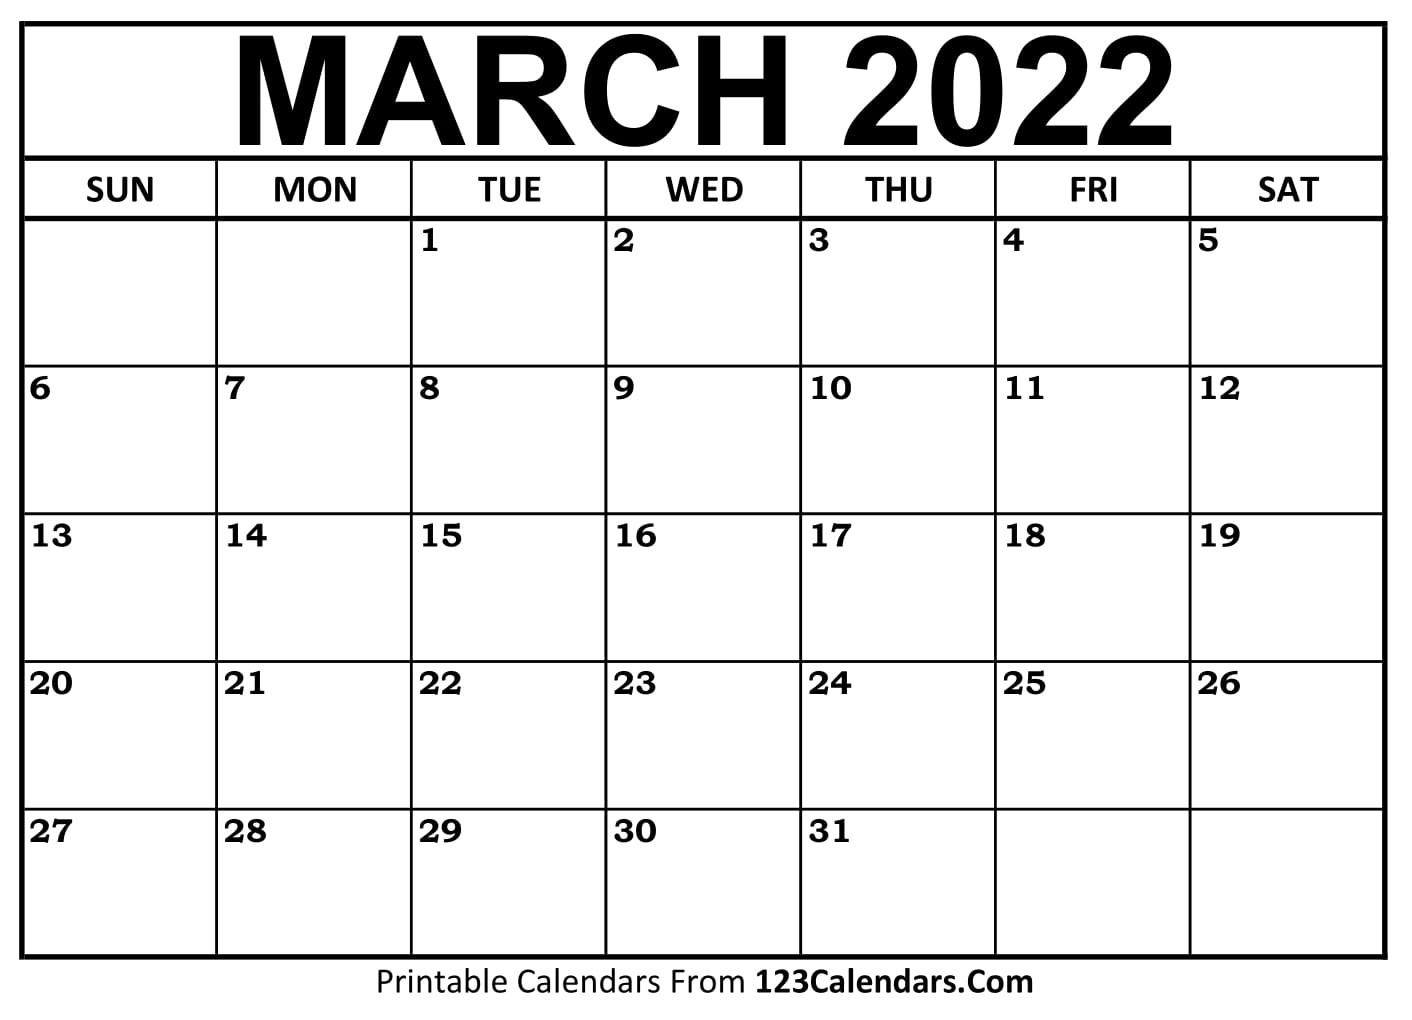 Monthly Calendar March 2022 Printable March 2022 Calendar Templates - 123Calendars.com